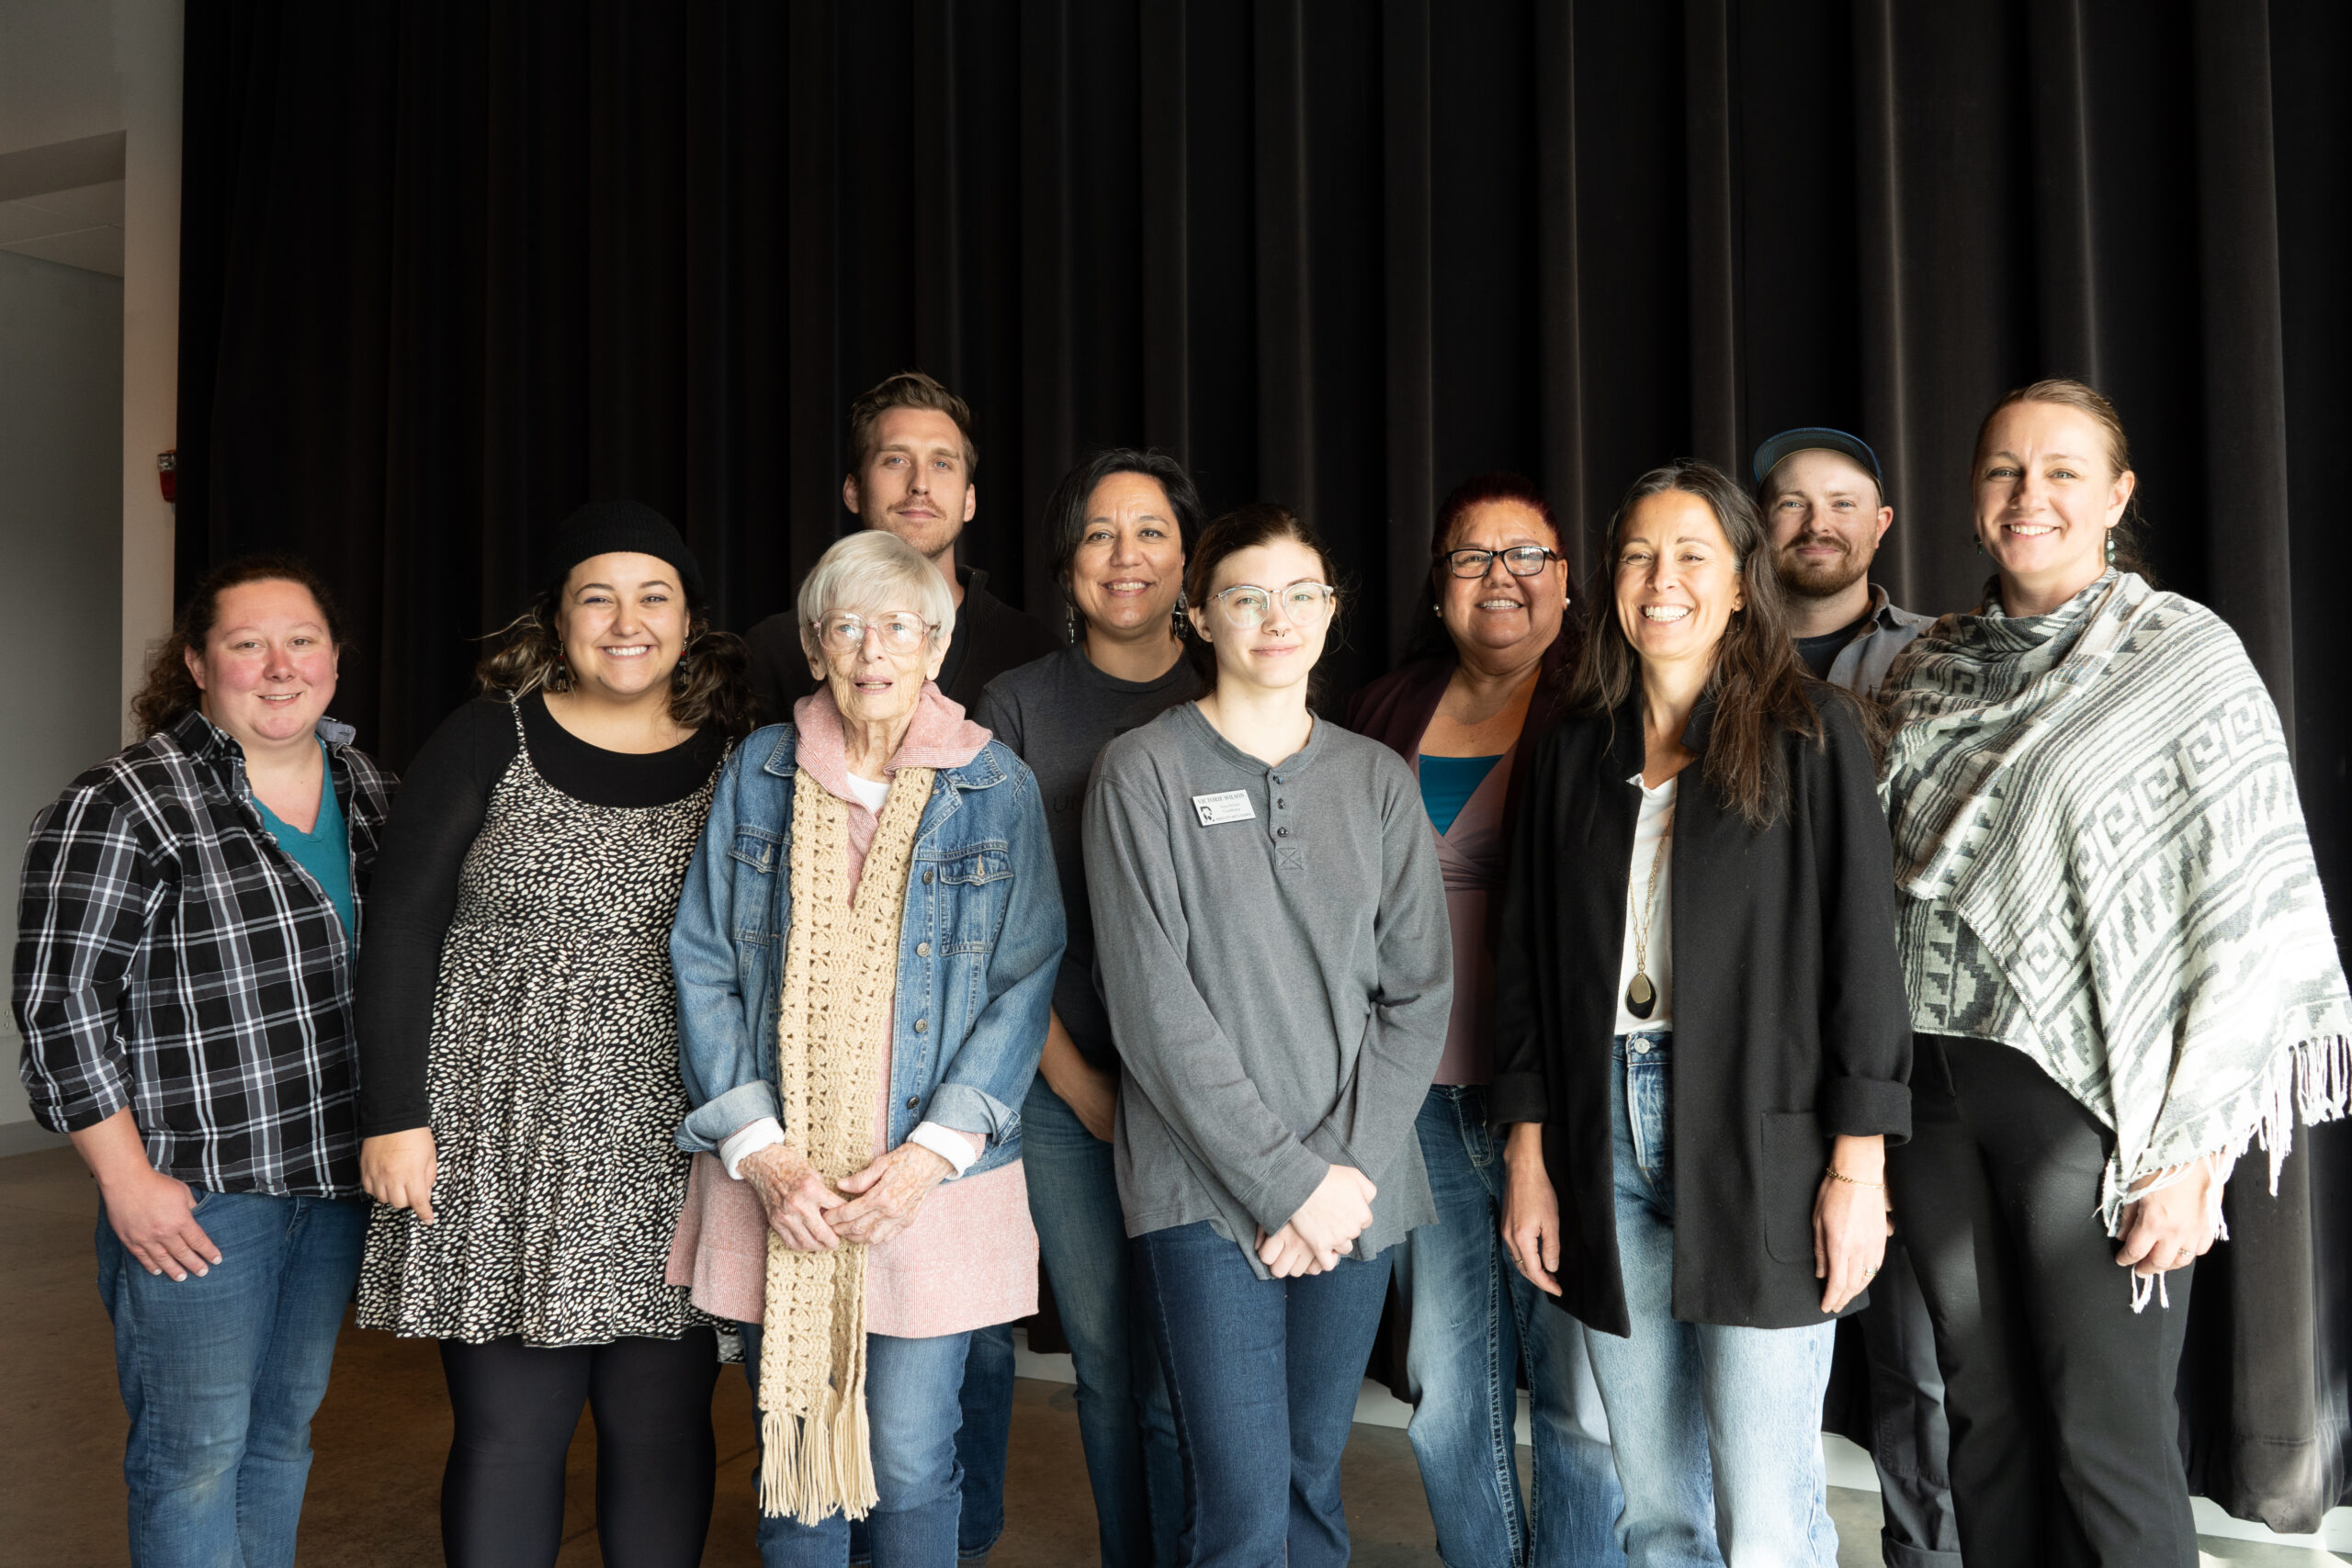 A stronger team at Rapid City Arts Council